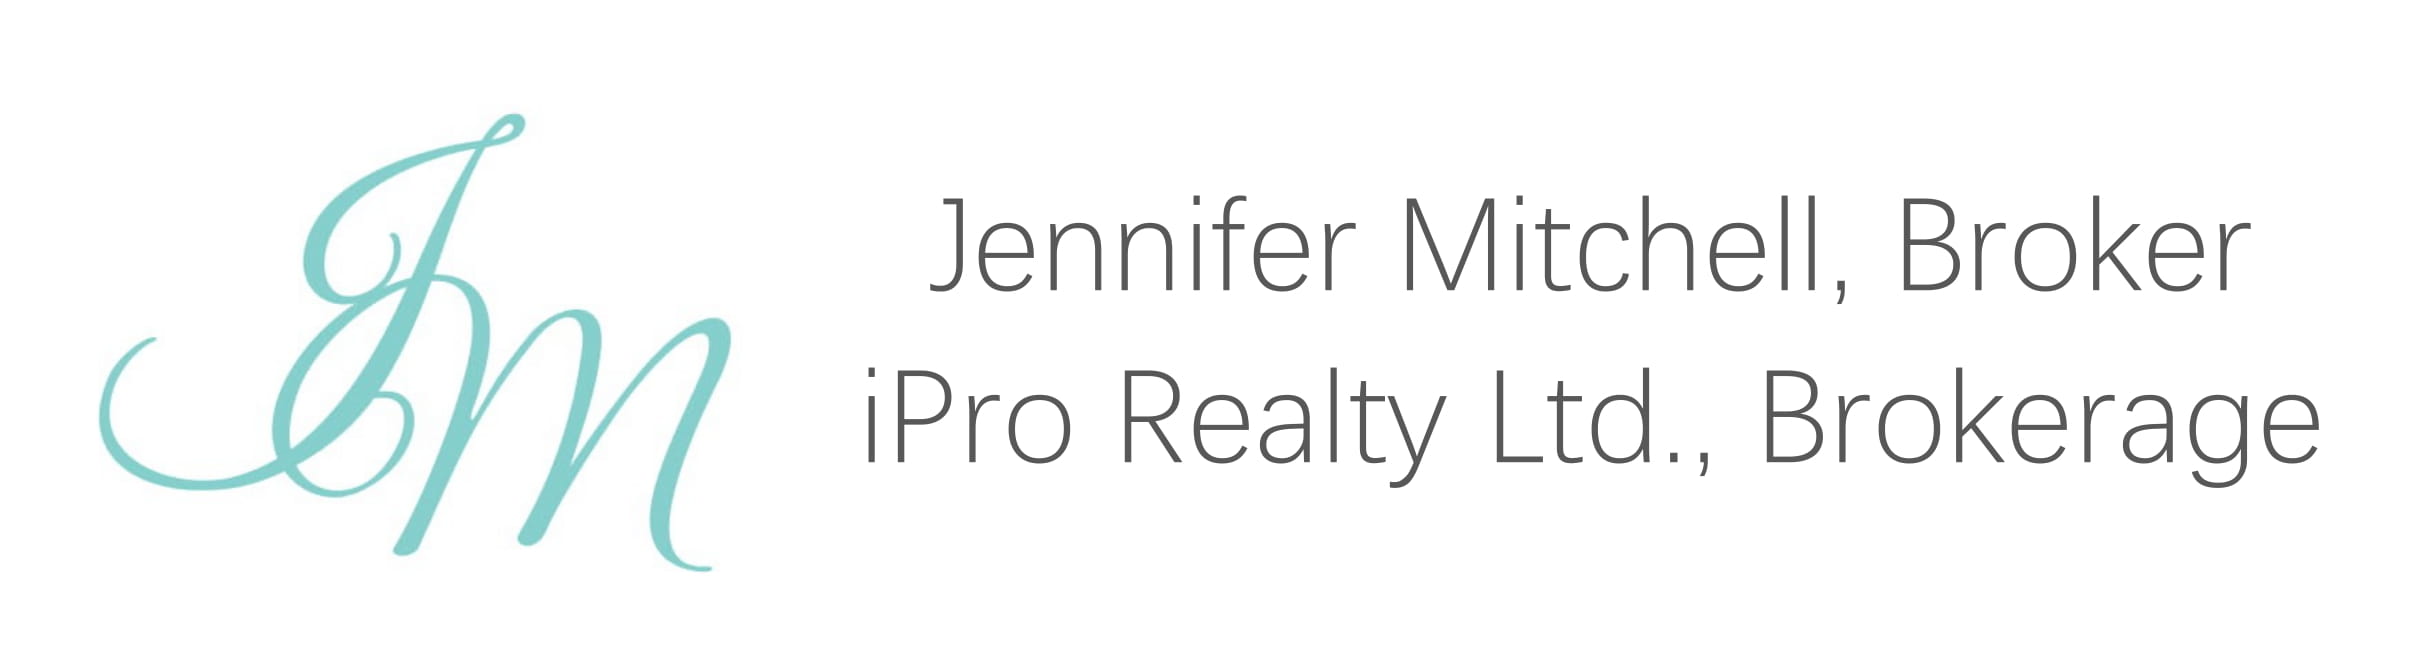 Jennifer Mitchell Real Estate Broker